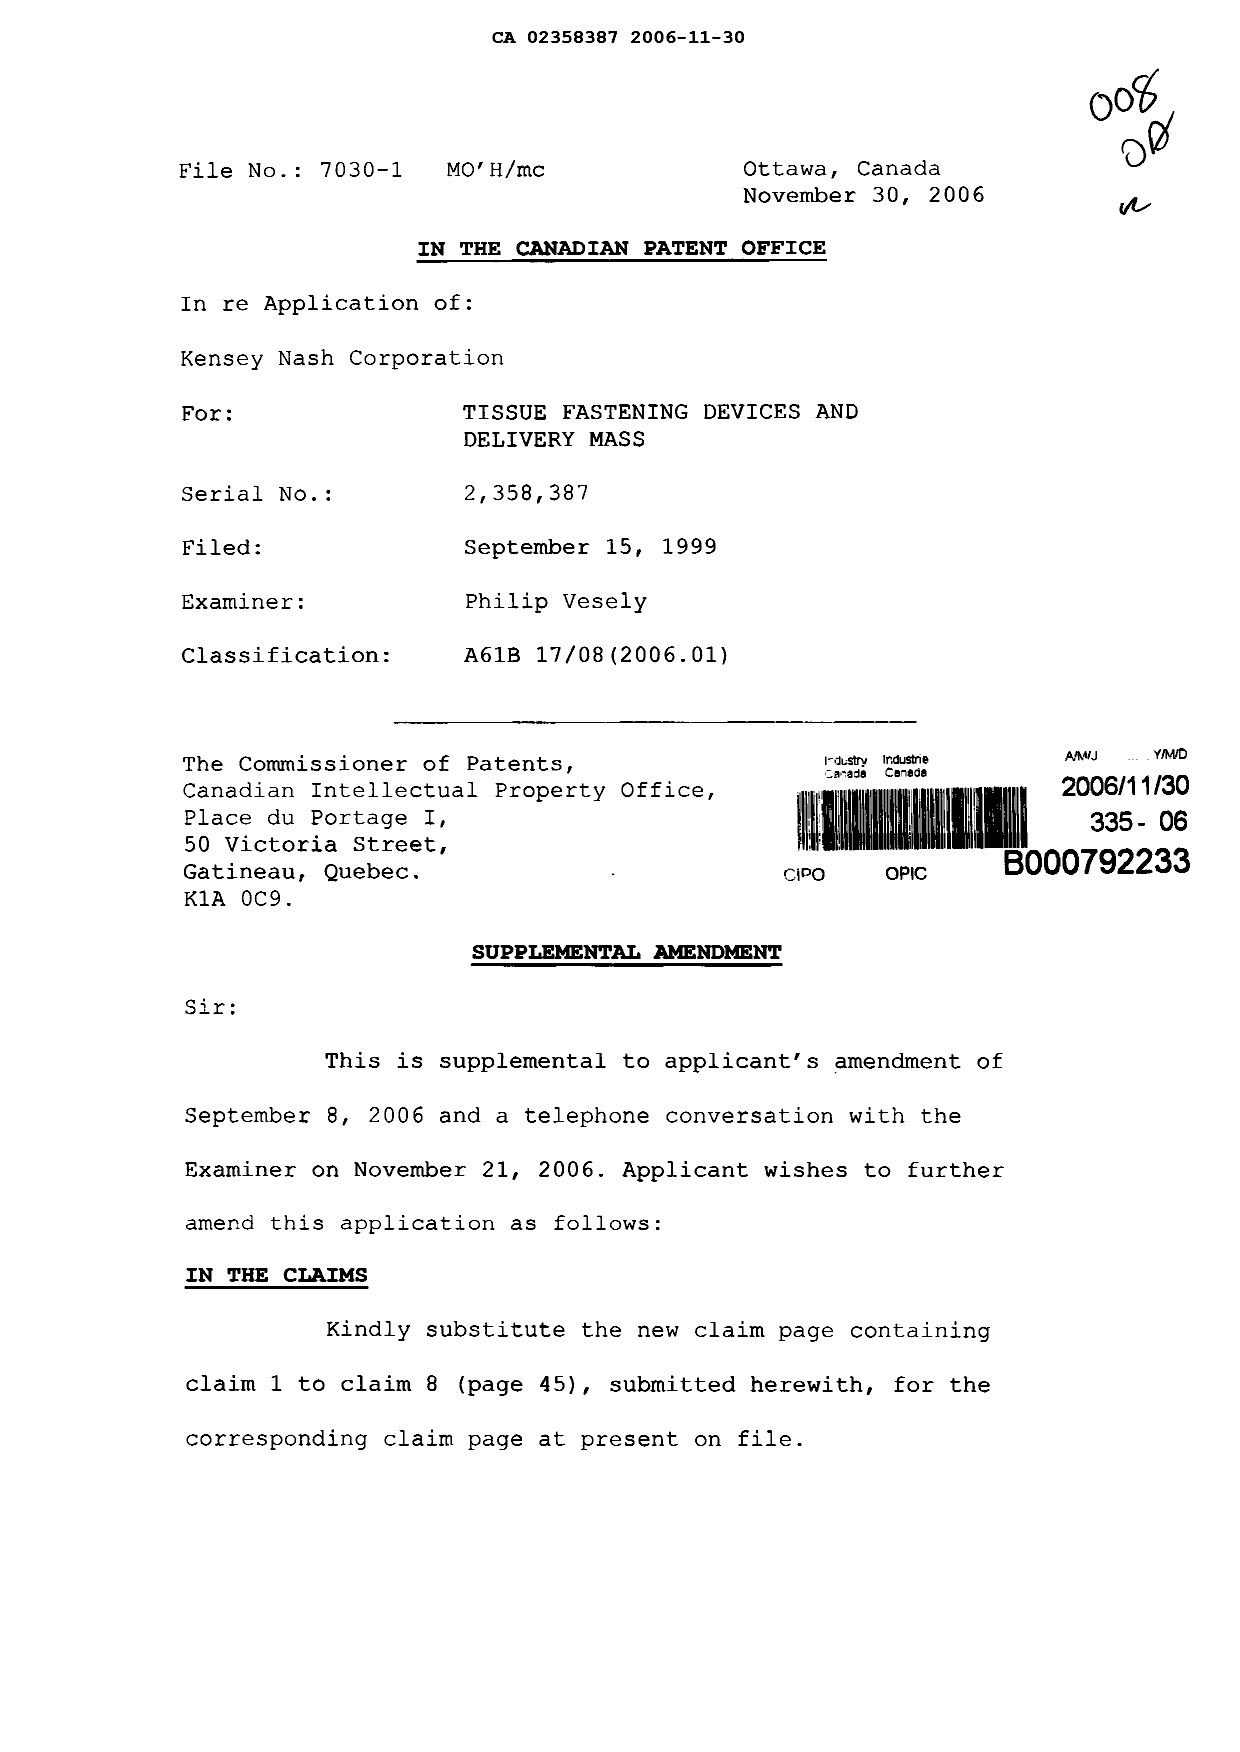 Canadian Patent Document 2358387. Prosecution-Amendment 20061130. Image 1 of 3